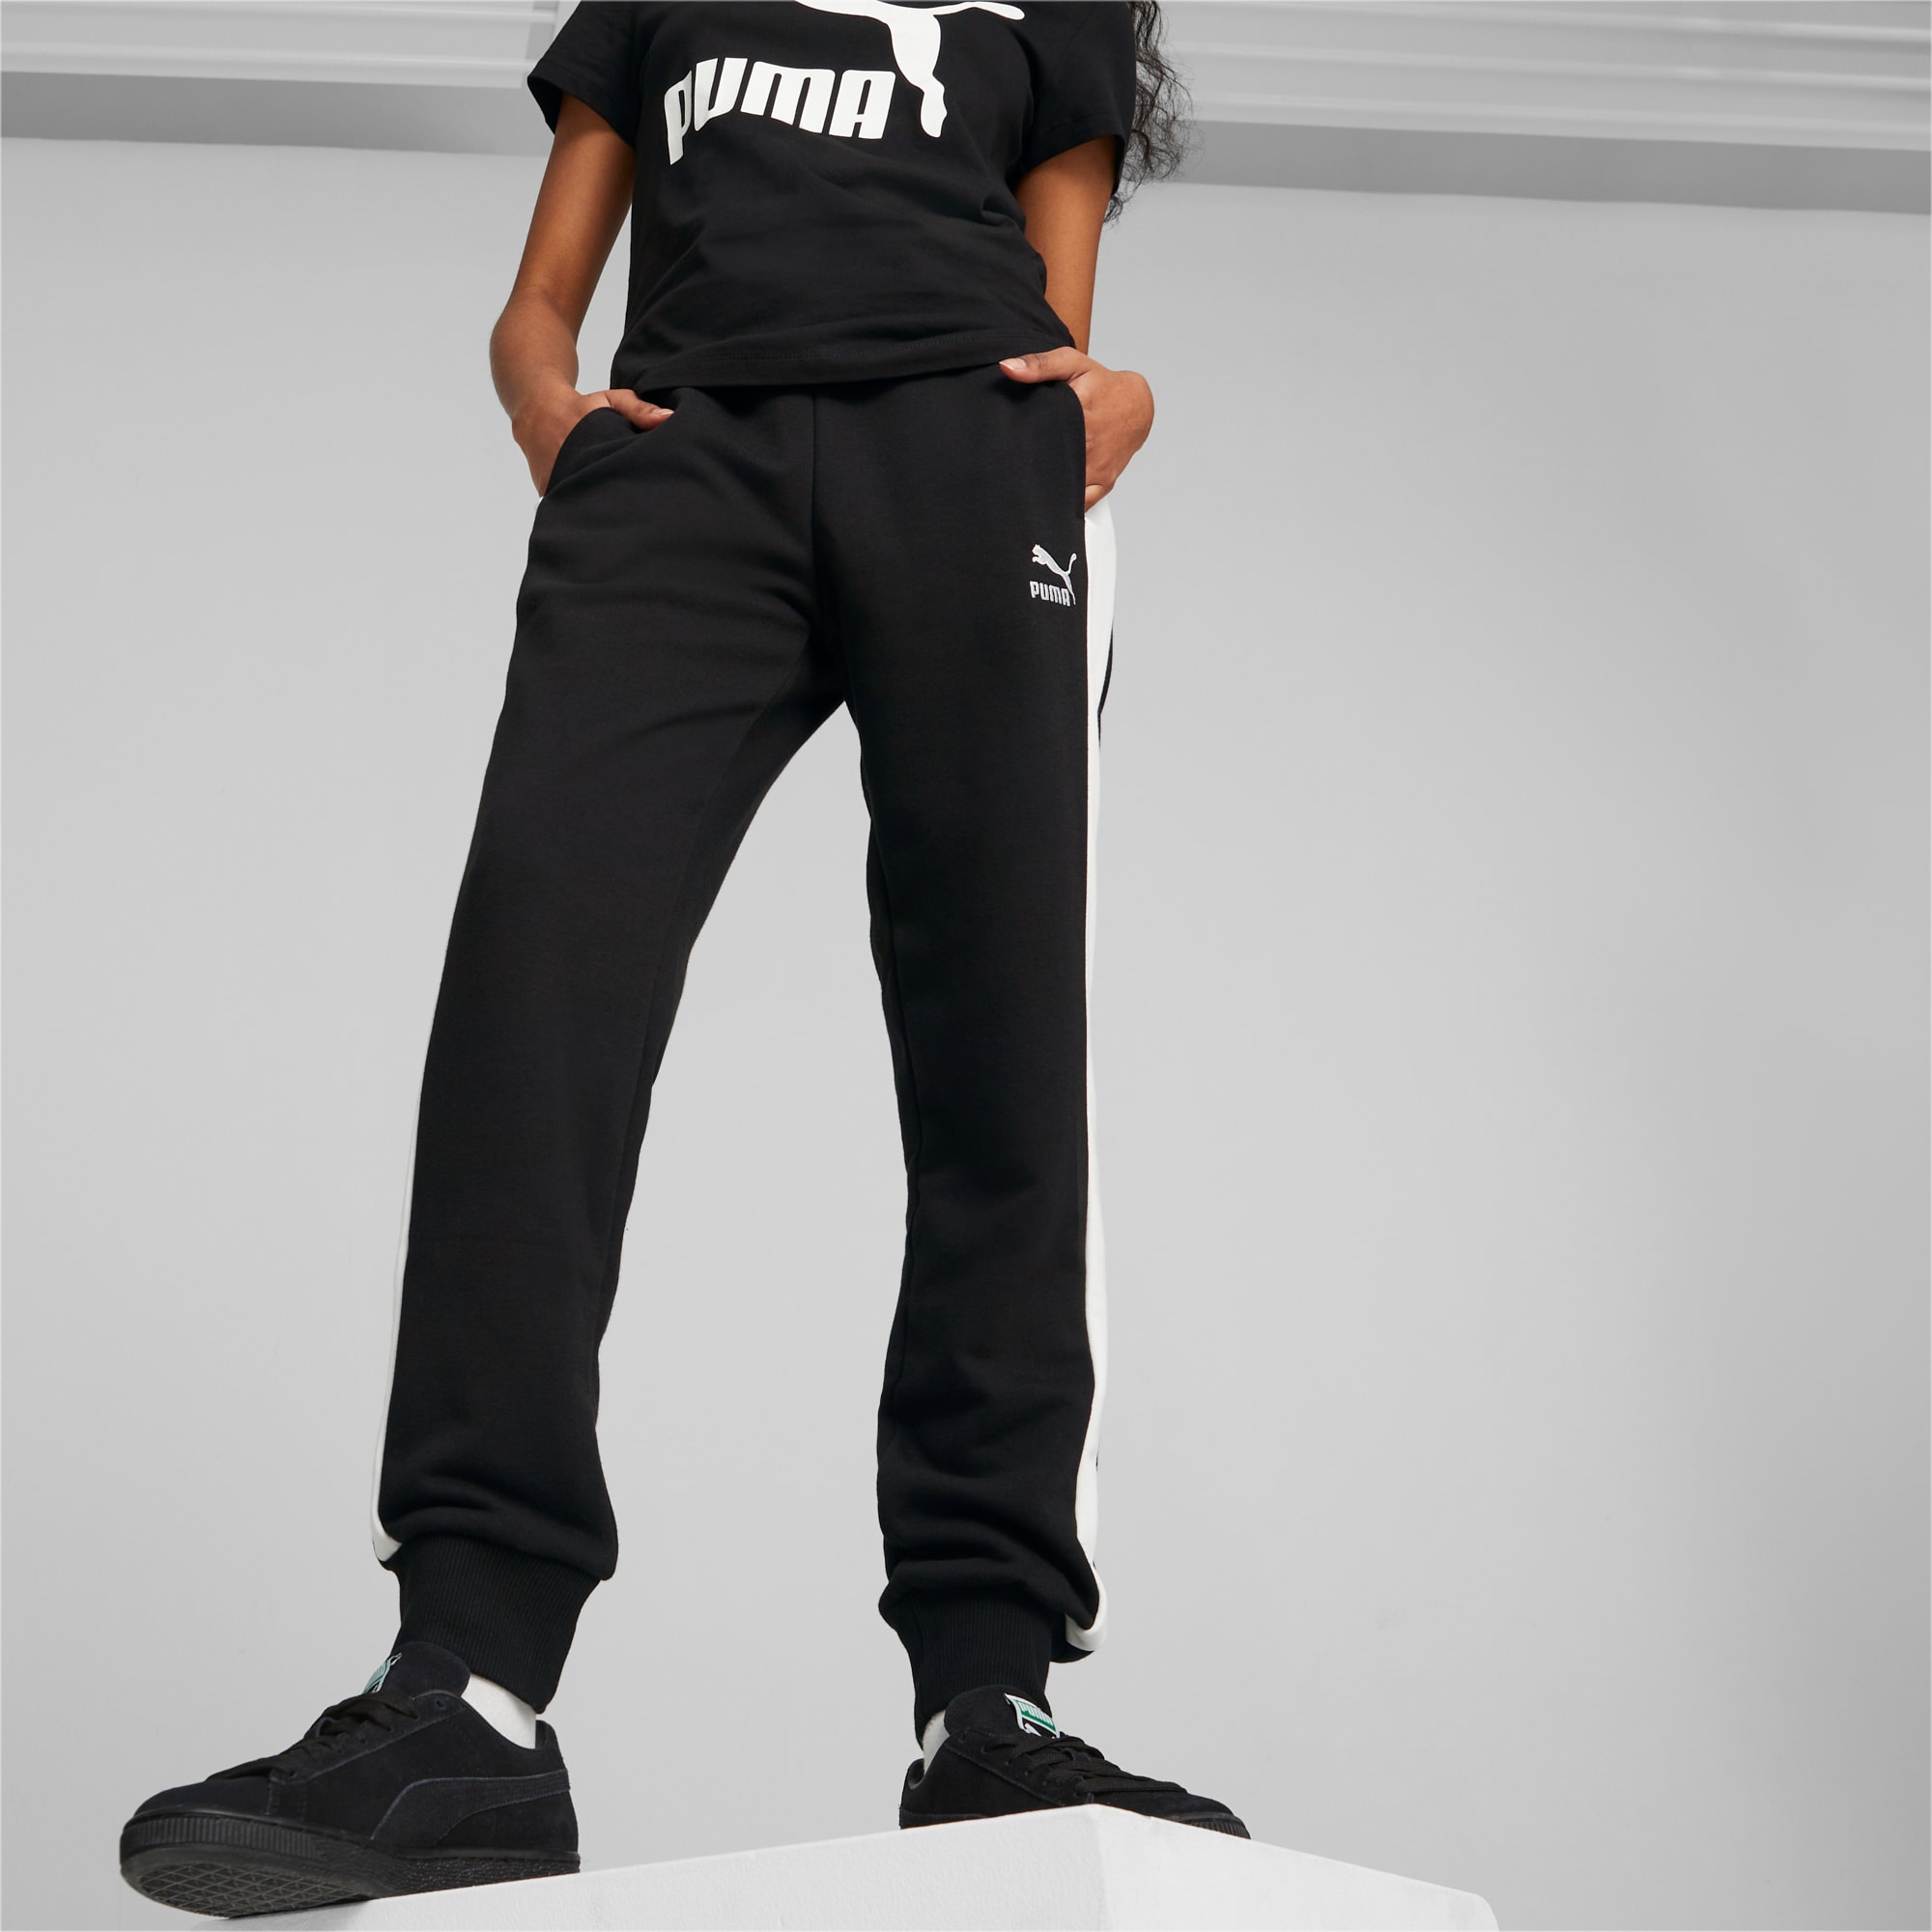 Iconic T7 Women's Track Pants, Puma Black, PUMA Shop All Puma